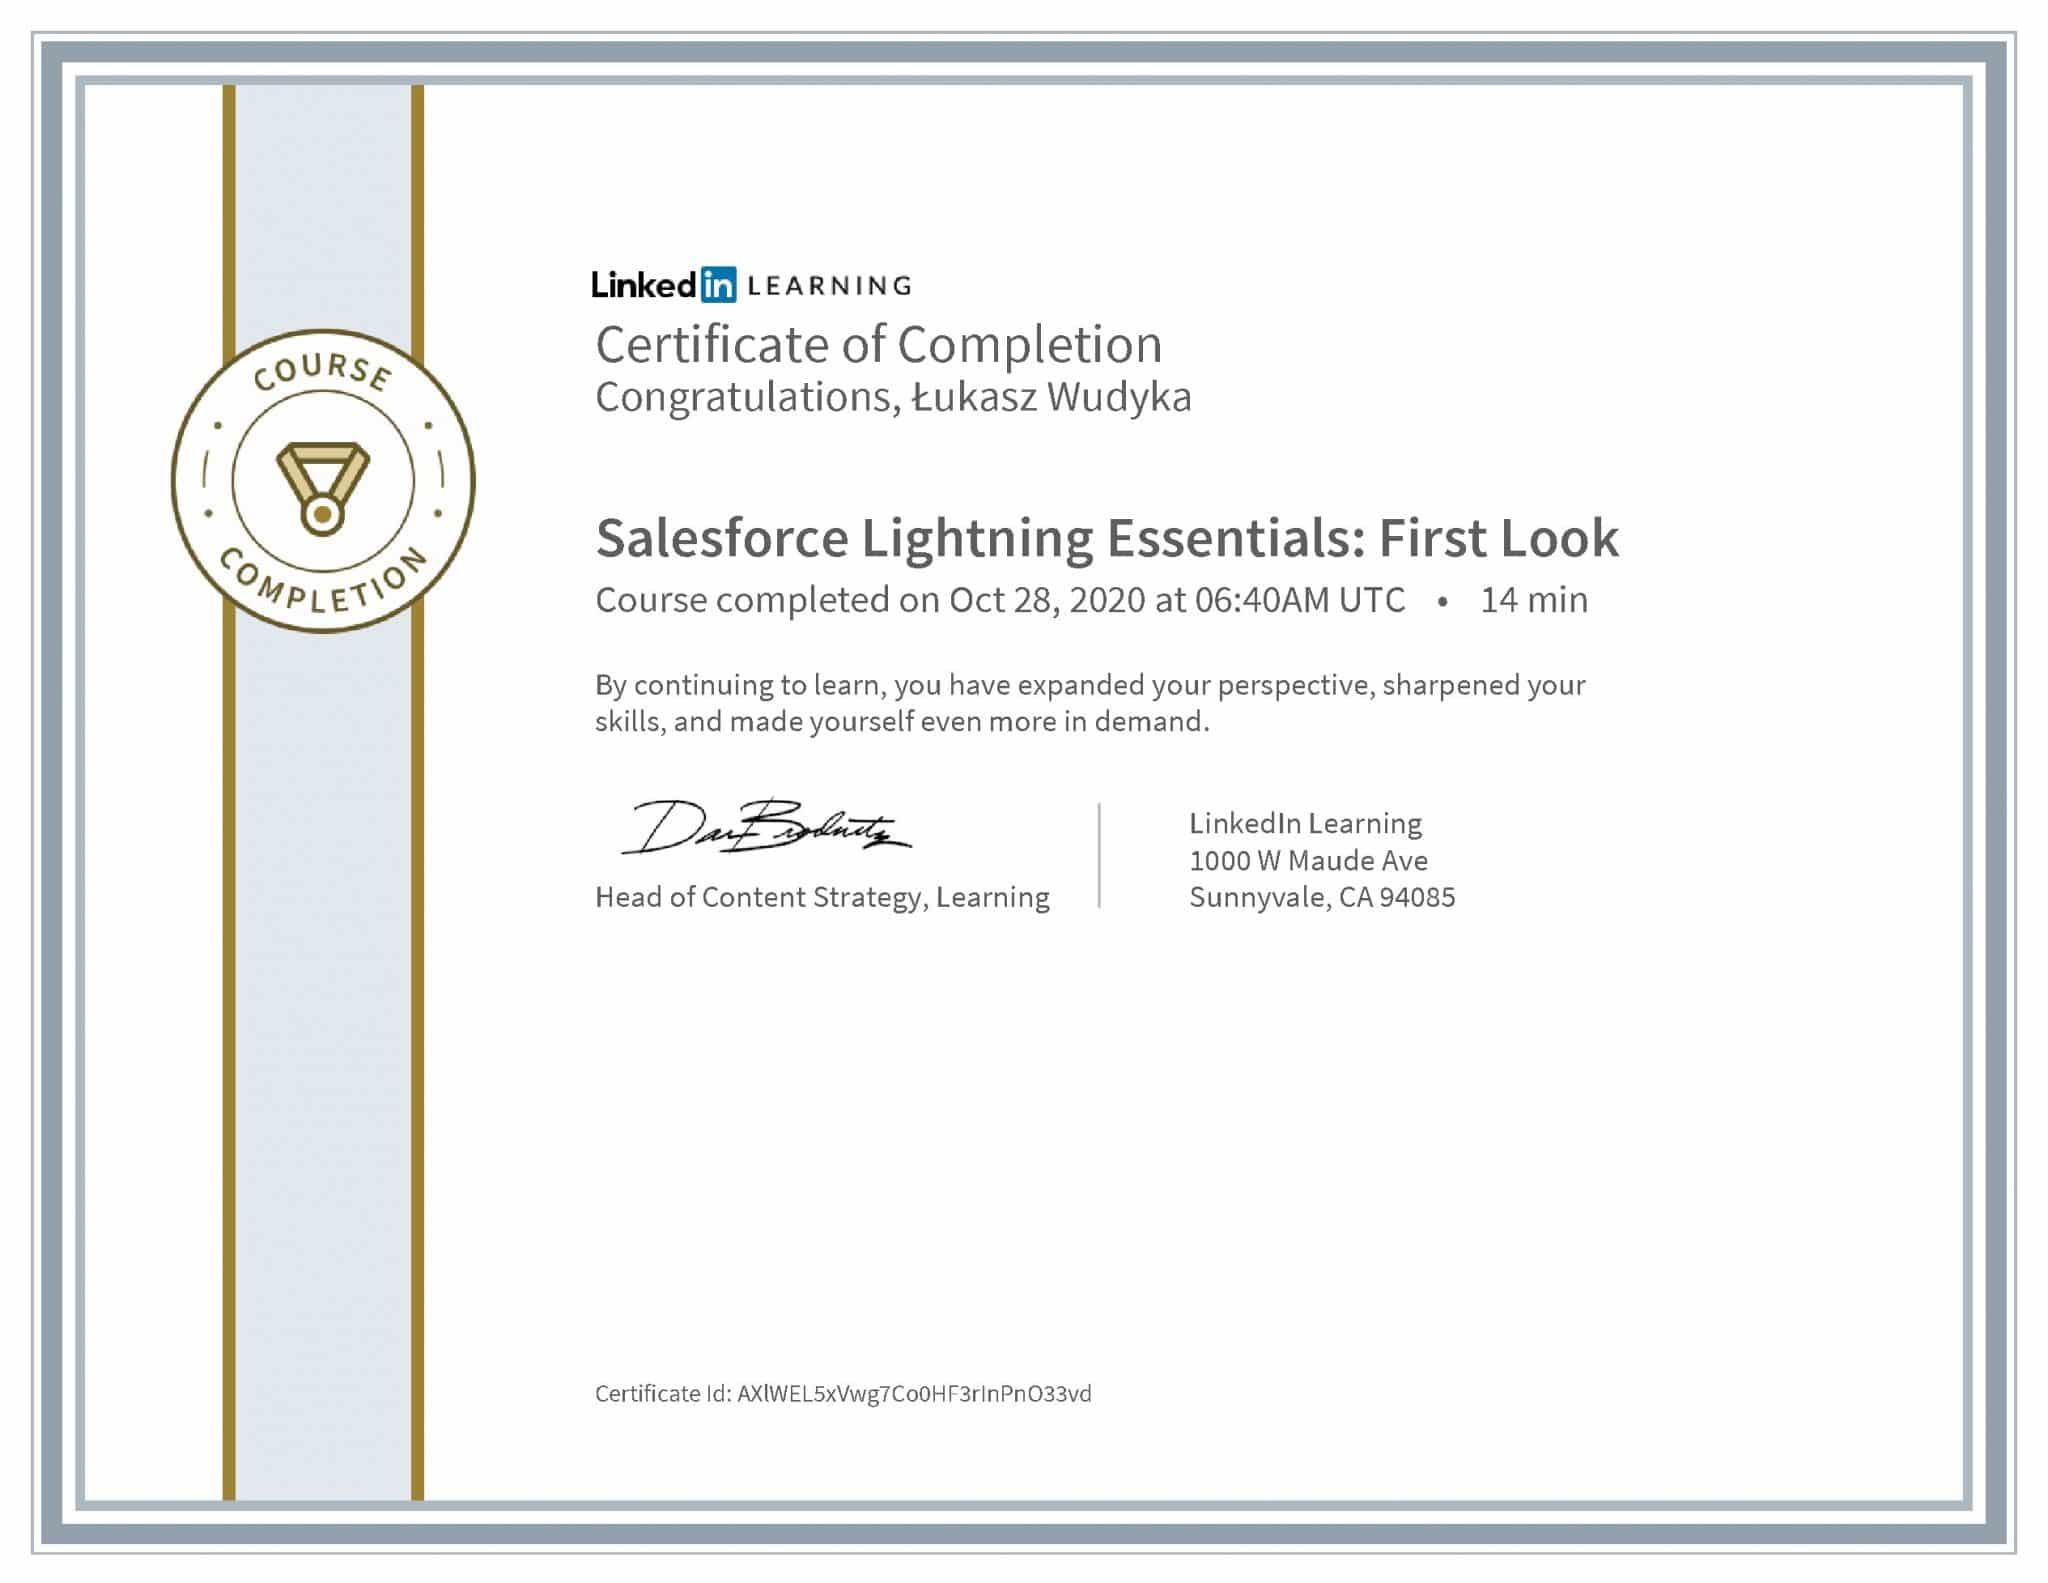 Łukasz Wudyka certyfikat LinkedIn Salesforce Lightning Essentials: First Look